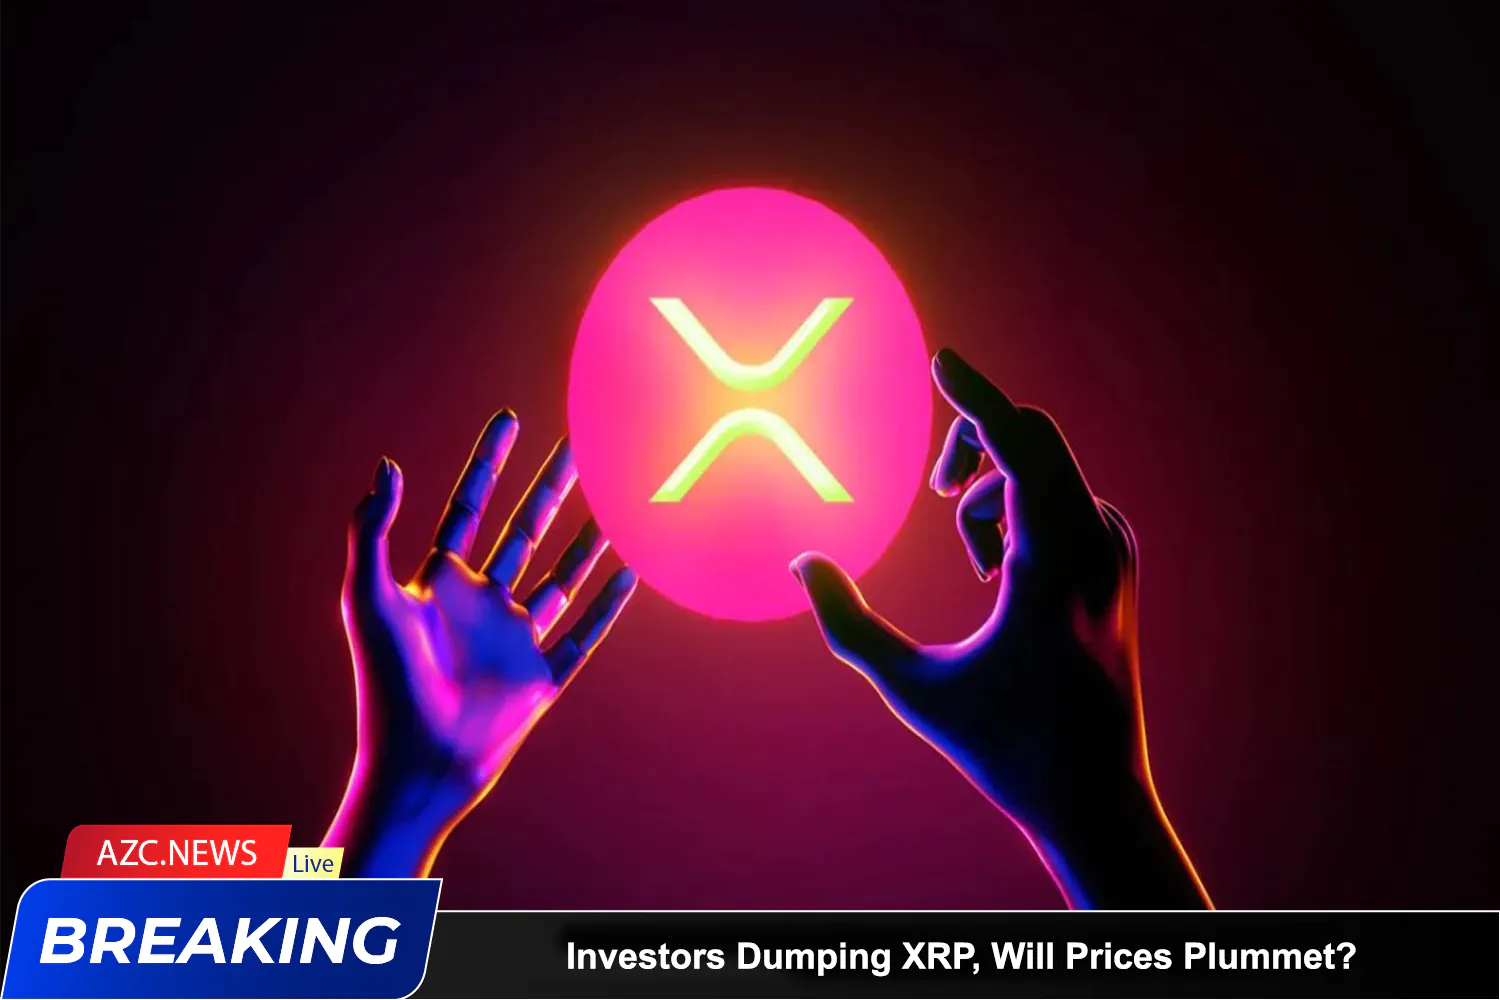 Azcnews Investors Dumping Xrp, Will Prices Plummet